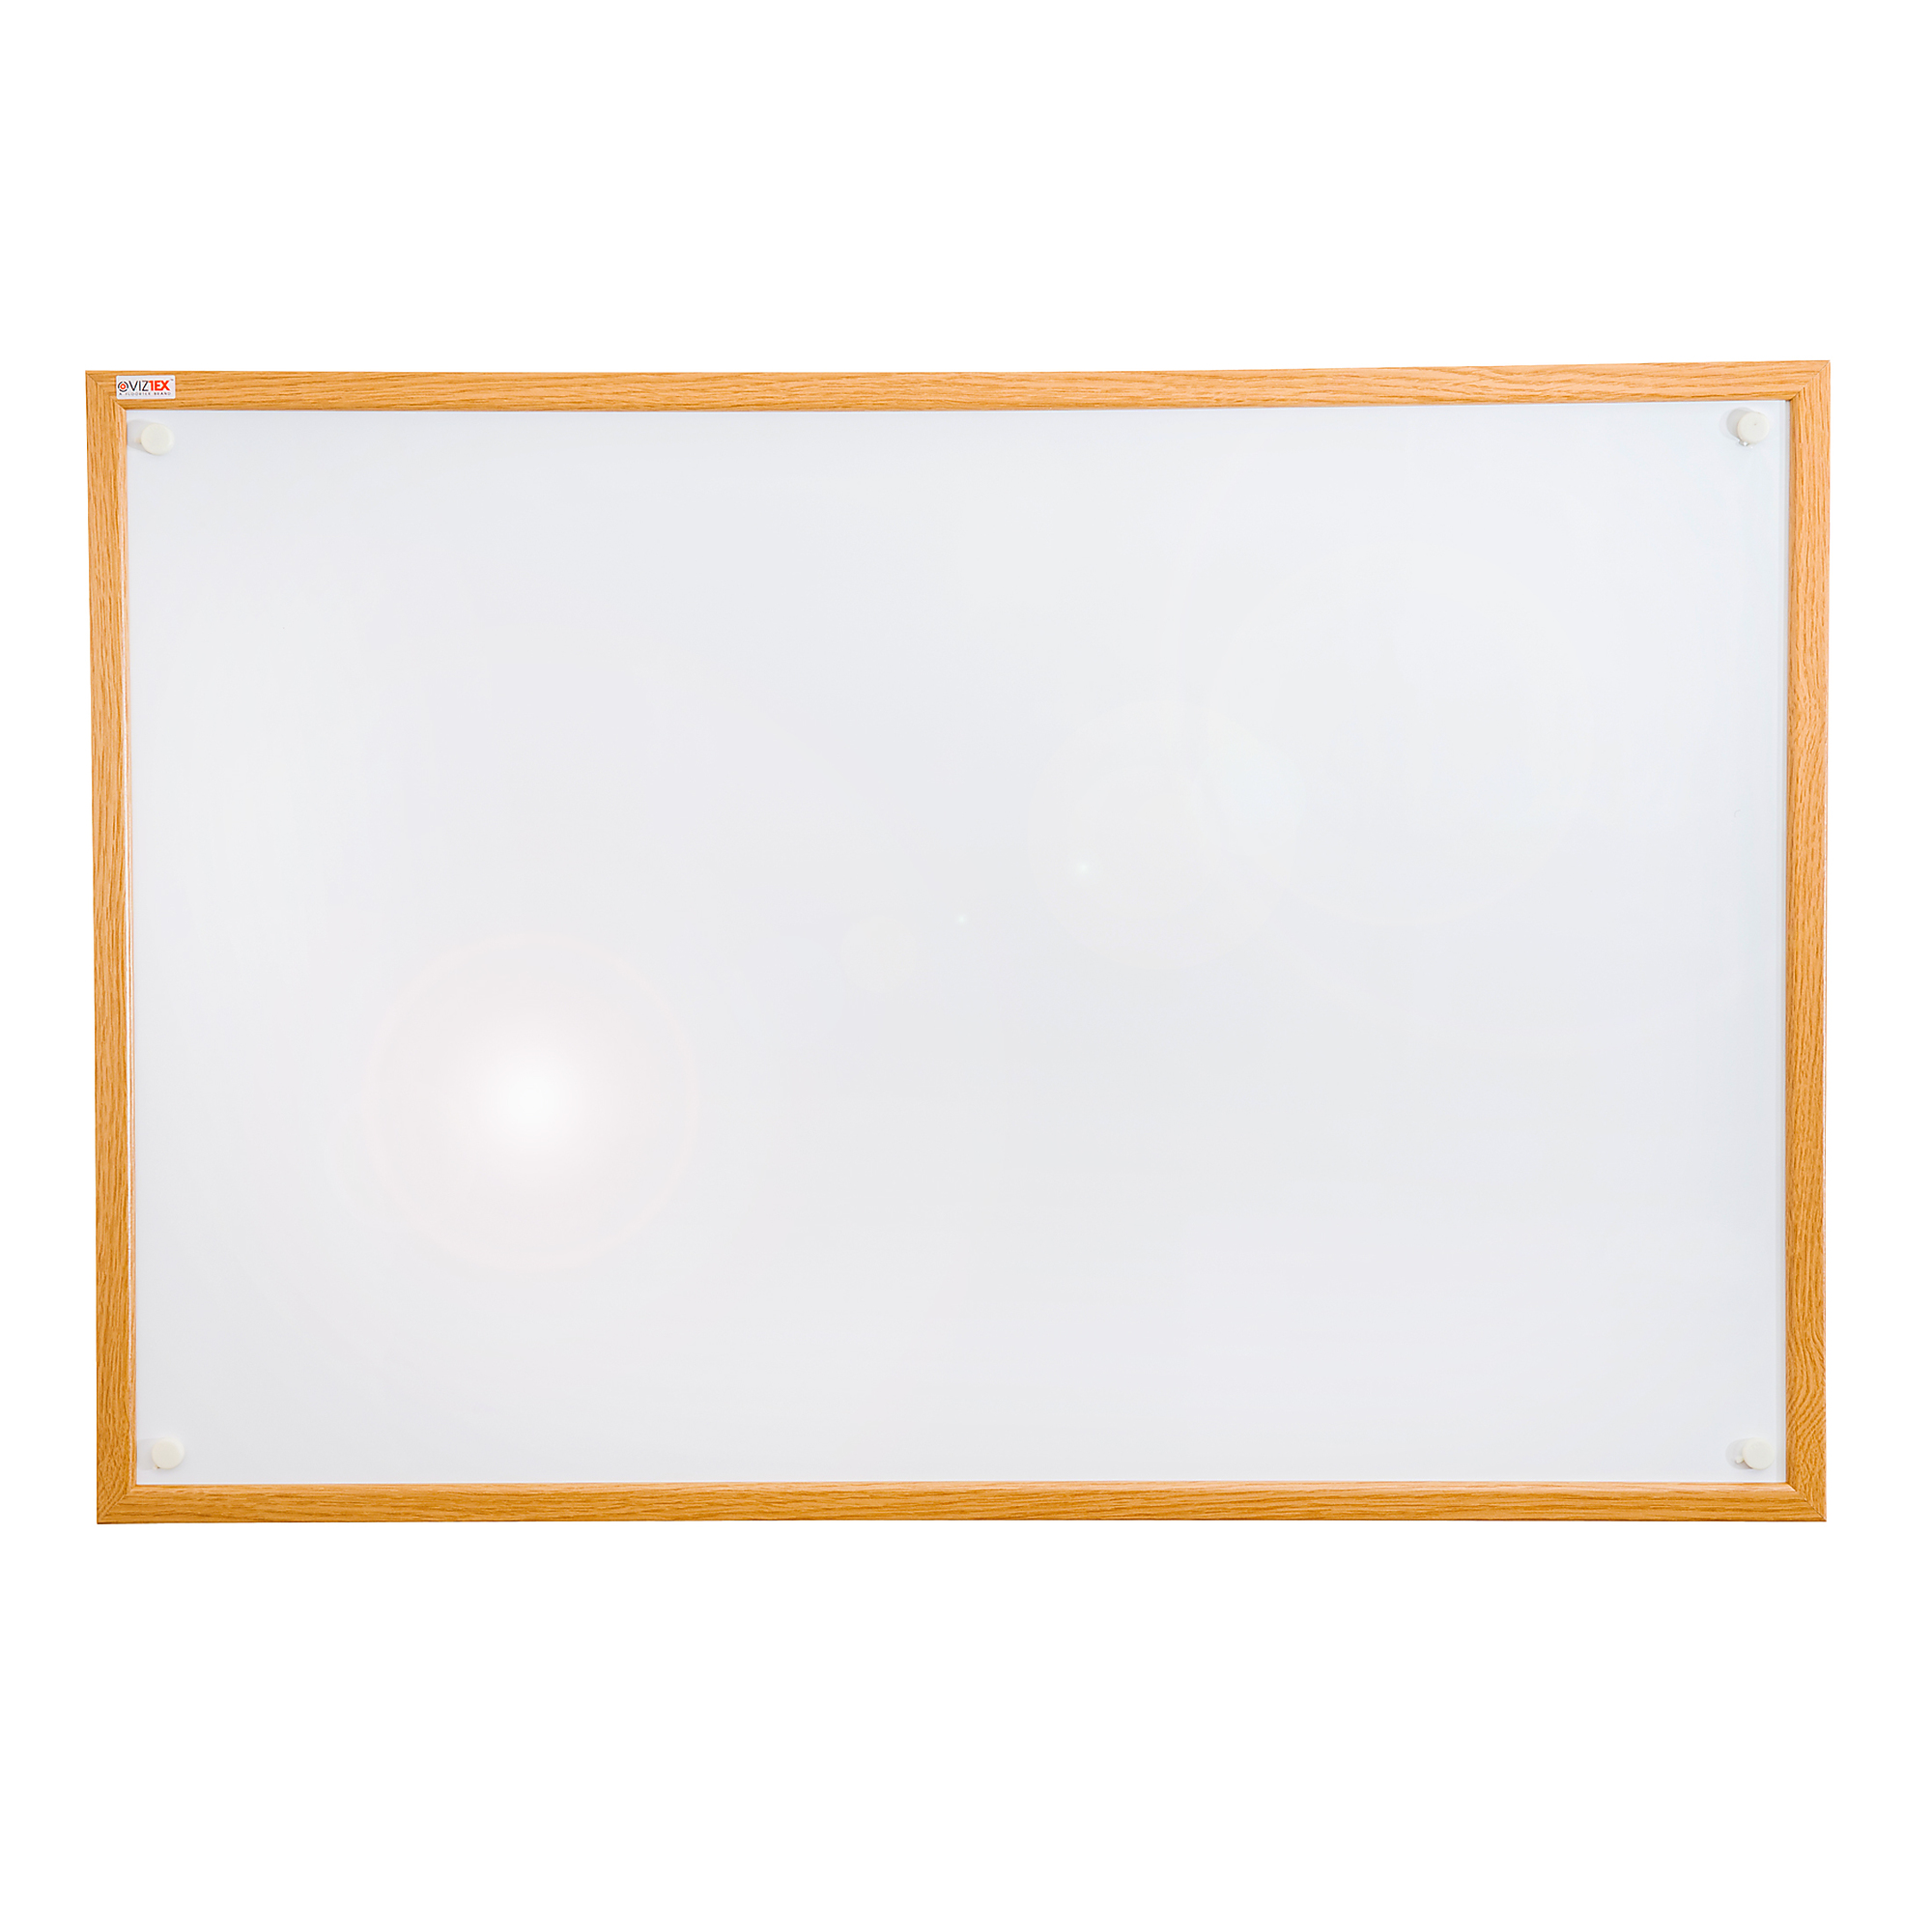 FLOORTEX Viztex , Lacq Steel Dry Erase Board;Oak Effect Frame 18x24 Color Finish White, Model FCVLM2418W